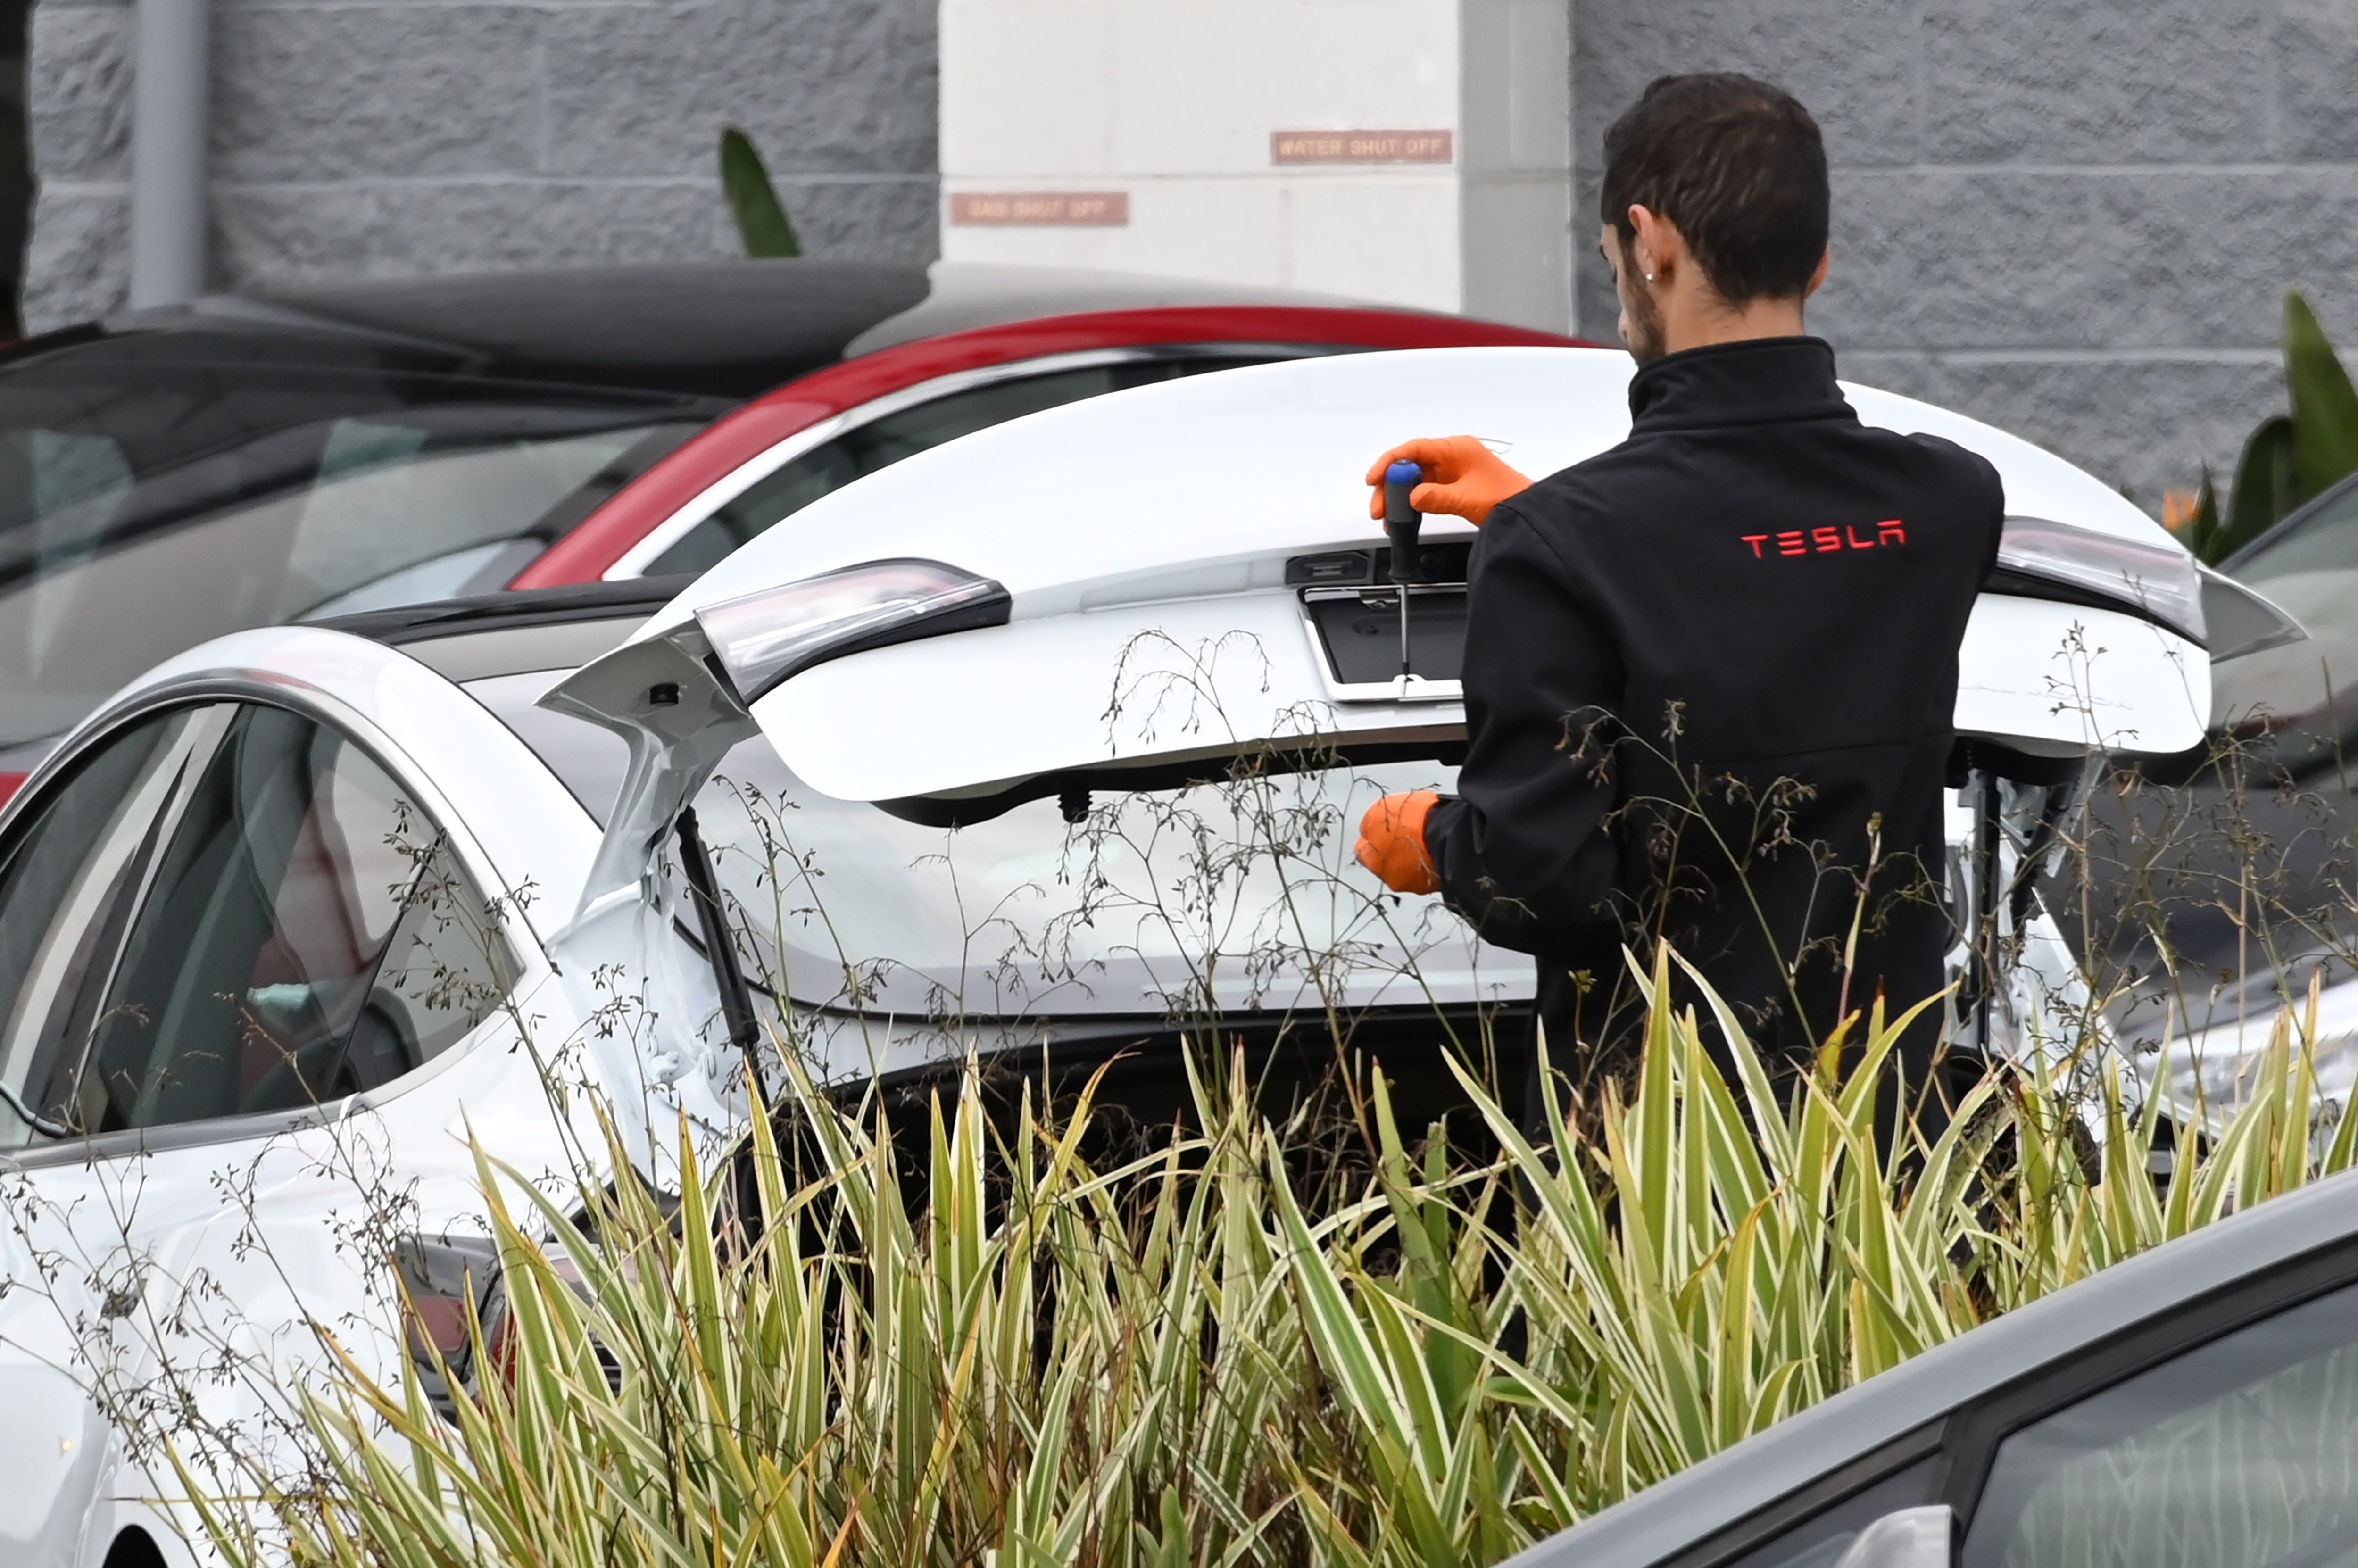 A Tesla employee works on a license plate frame outside a Tesla showroom in Burbank, California.